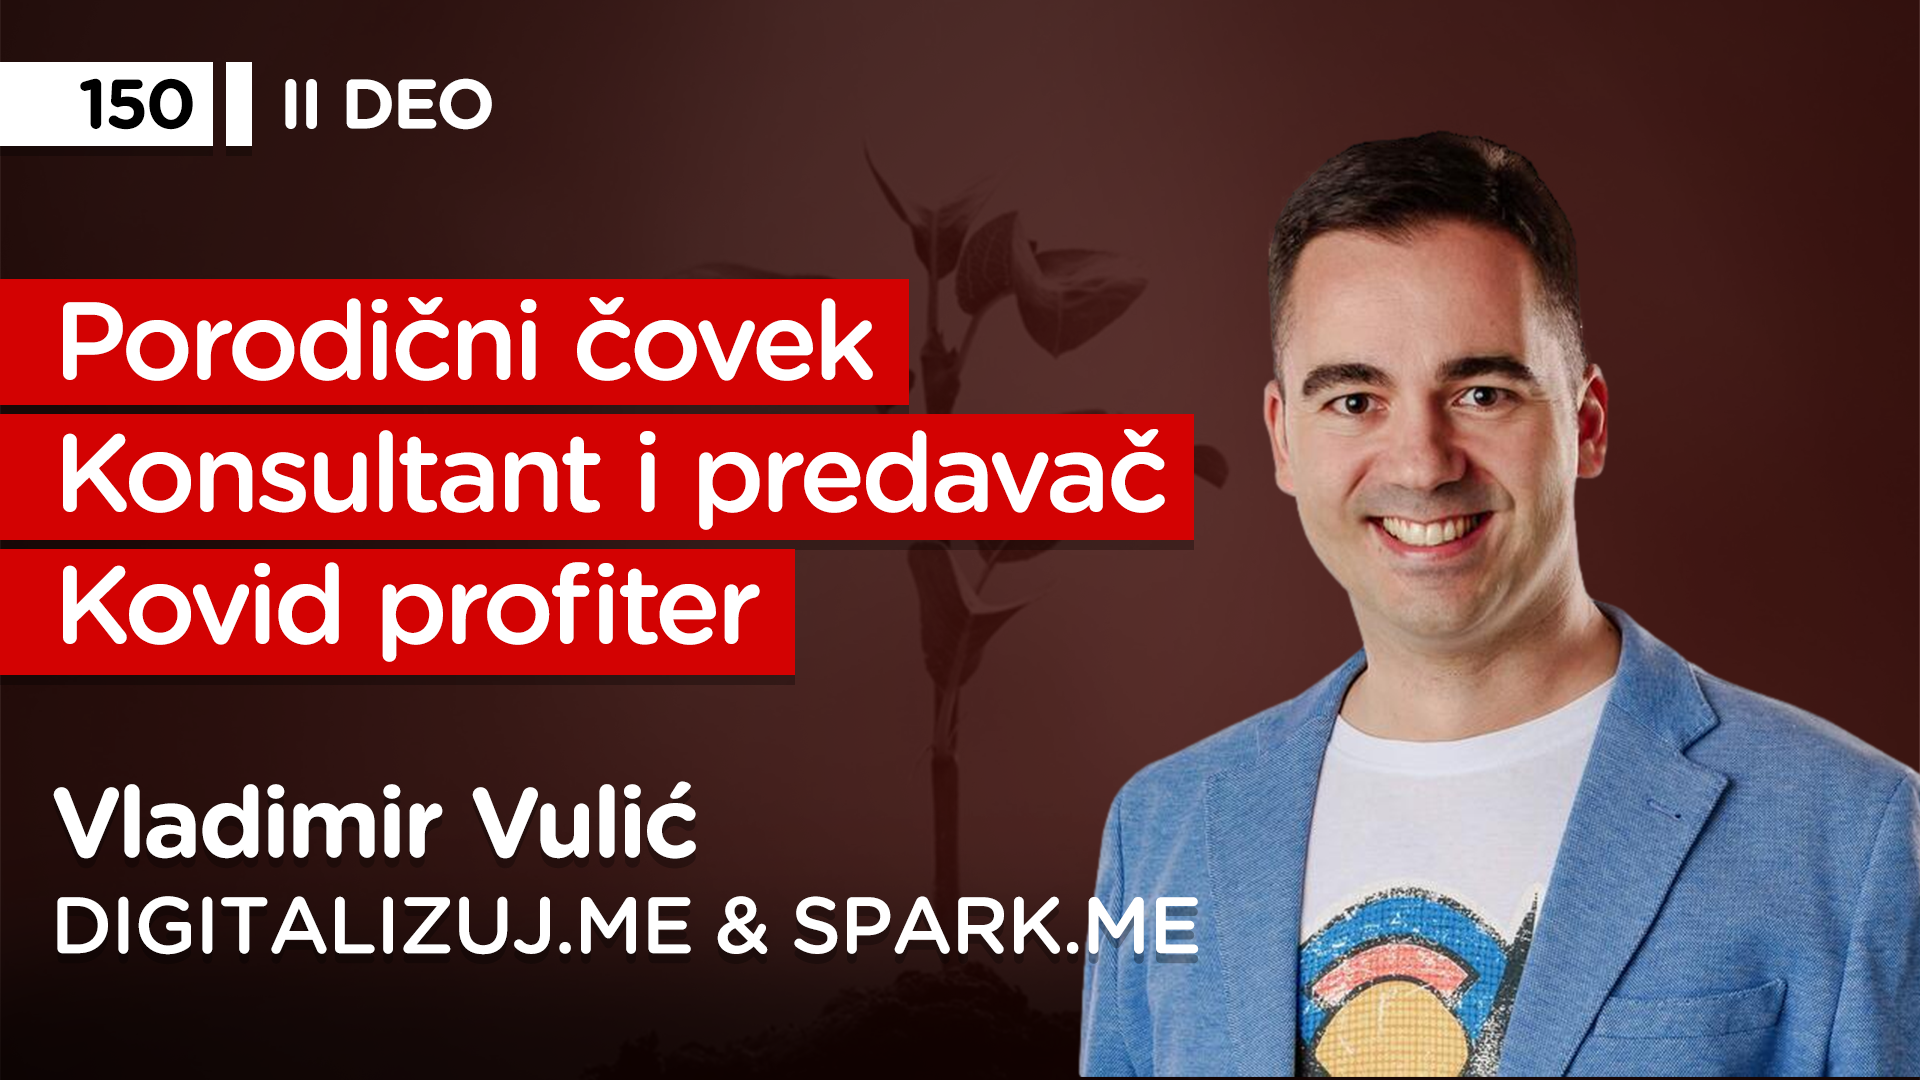 EP150: Vladimir Vulić